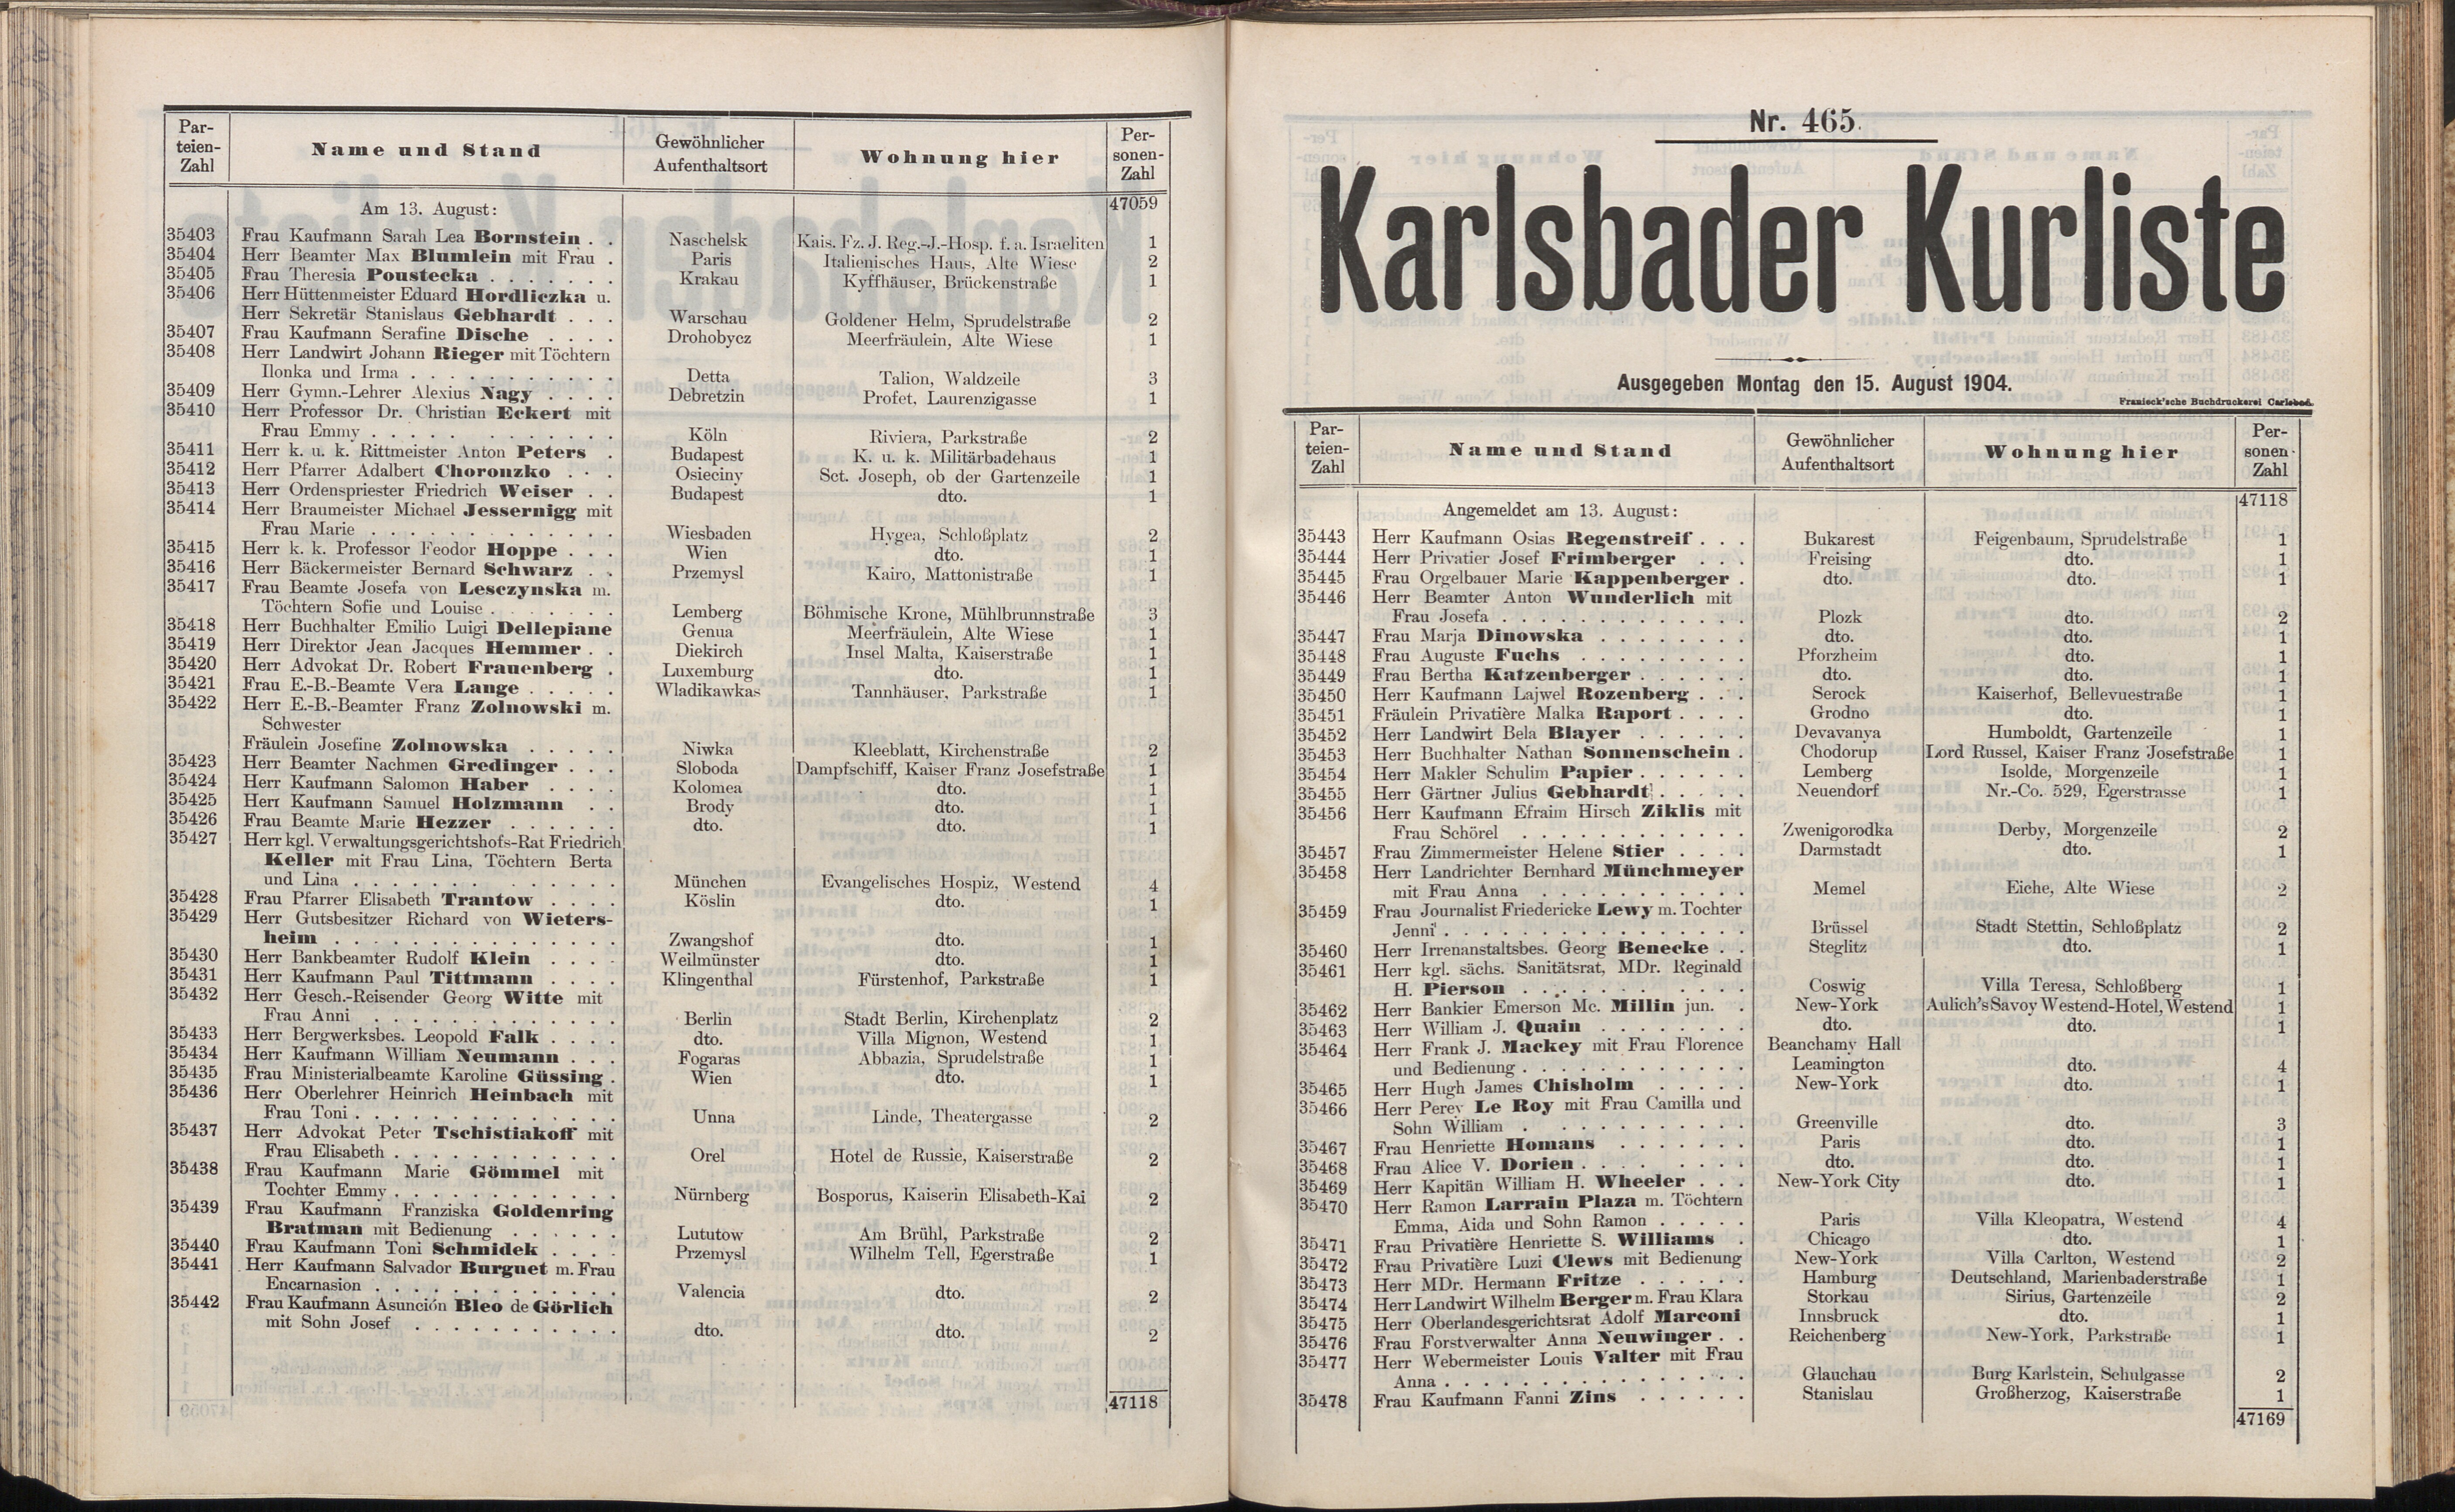 487. soap-kv_knihovna_karlsbader-kurliste-1904_4880